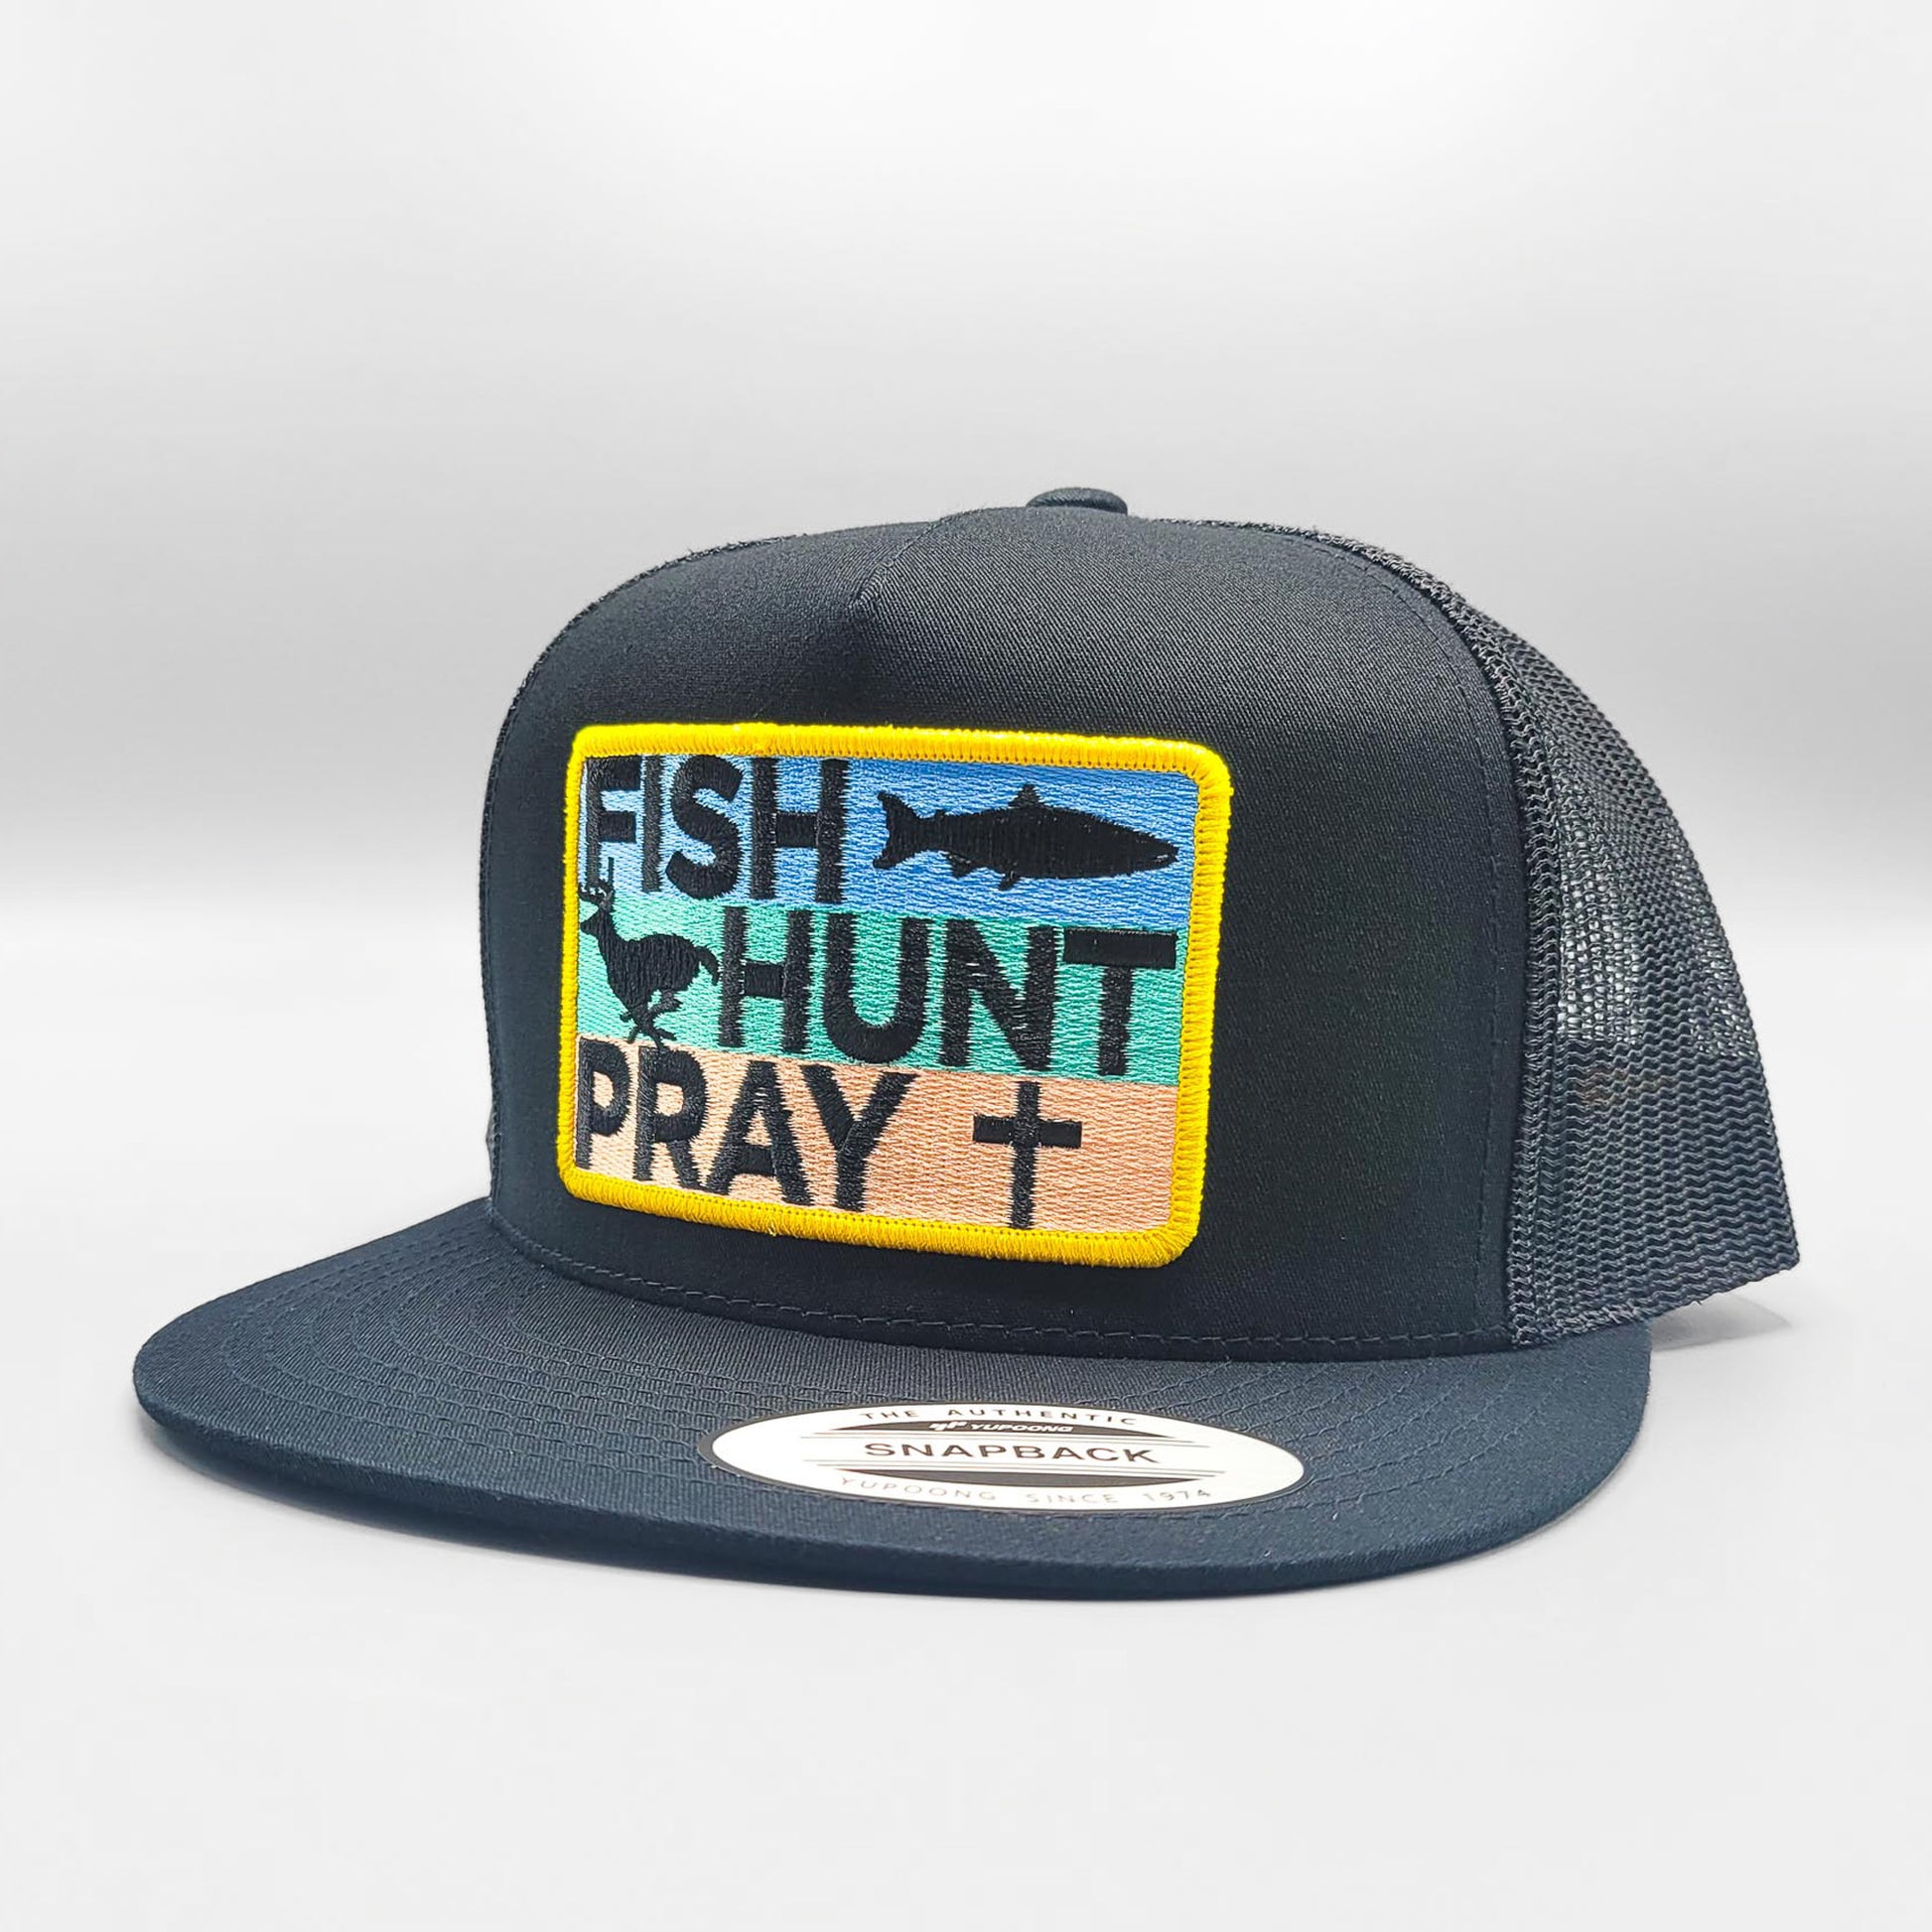 Fish Hunt Pray Trucker Hat, Christian Fishing Hunting Patch On Yupoong 6006 Snapback